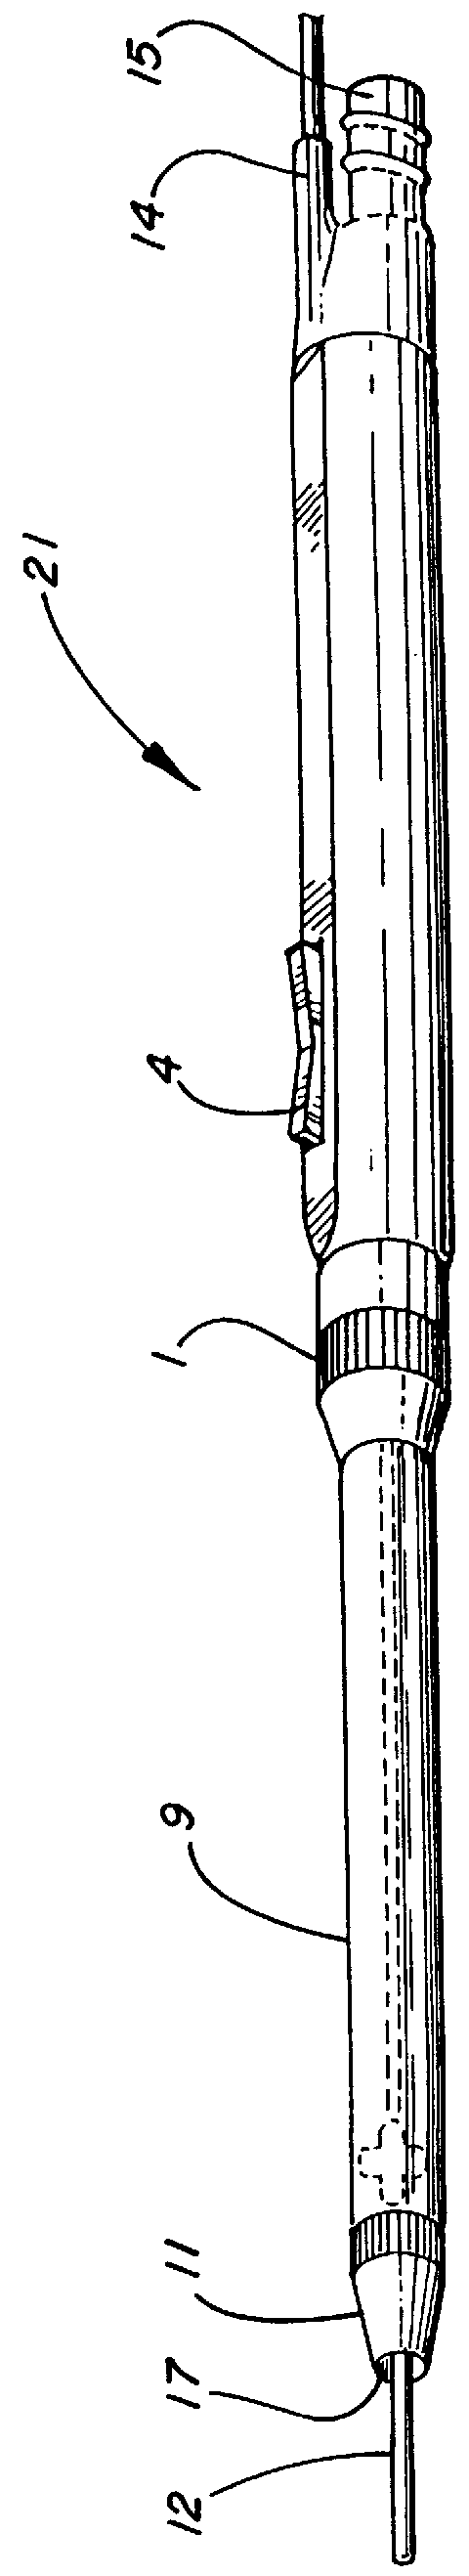 Electro-surgical unit pencil apparatus having a removable shroud